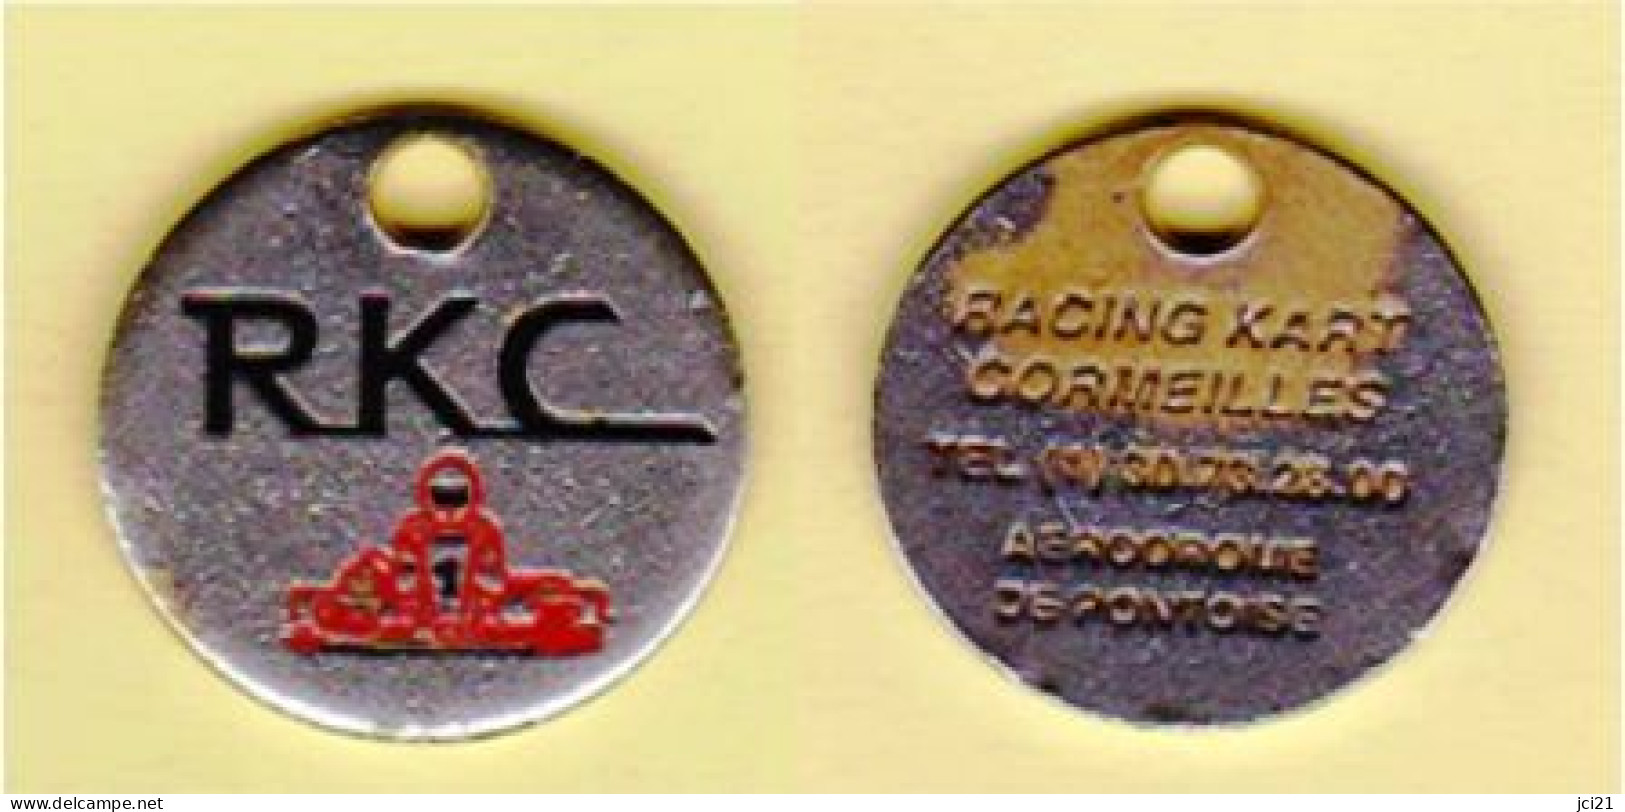 Jeton De Caddie " RKC - RACING KART CORMEILLES - Aérodrome De Pontoise" Karting [G]_Je045 - Trolley Token/Shopping Trolley Chip